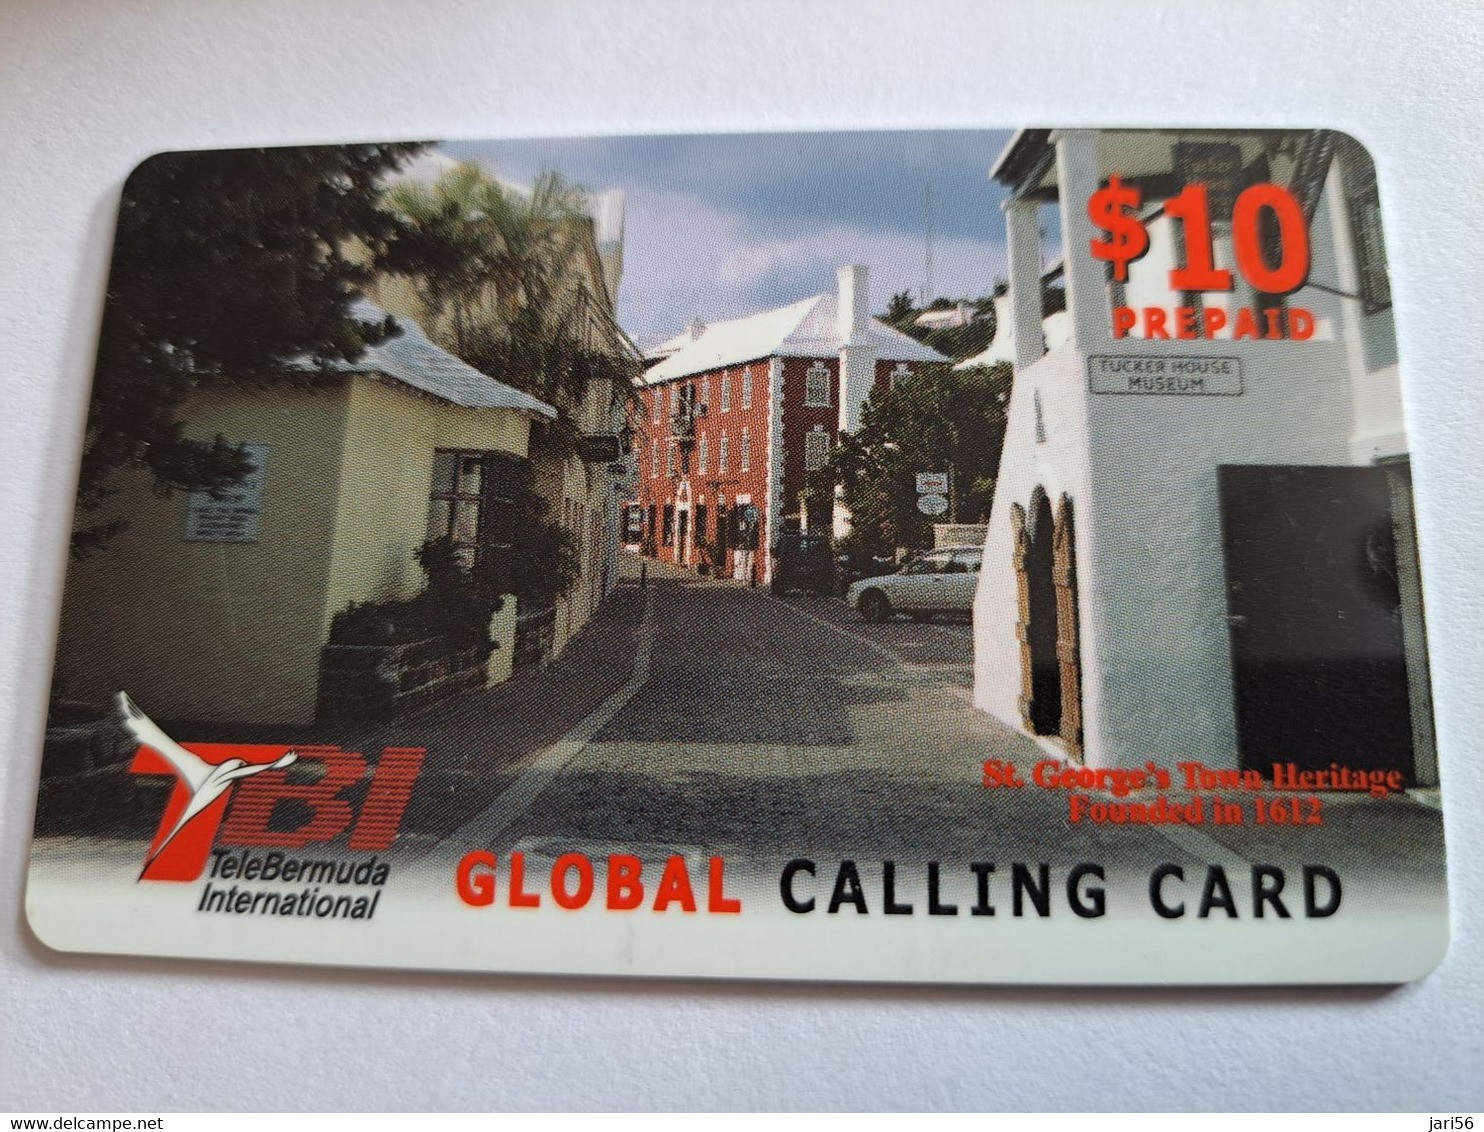 BERMUDA  $10 $ IN RED   -  BERMUDA  STREET SCENE       PREPAID CARD  Fine USED  TBI TELEBERMUDA INTERNATIONAL **10274** - Bermudas